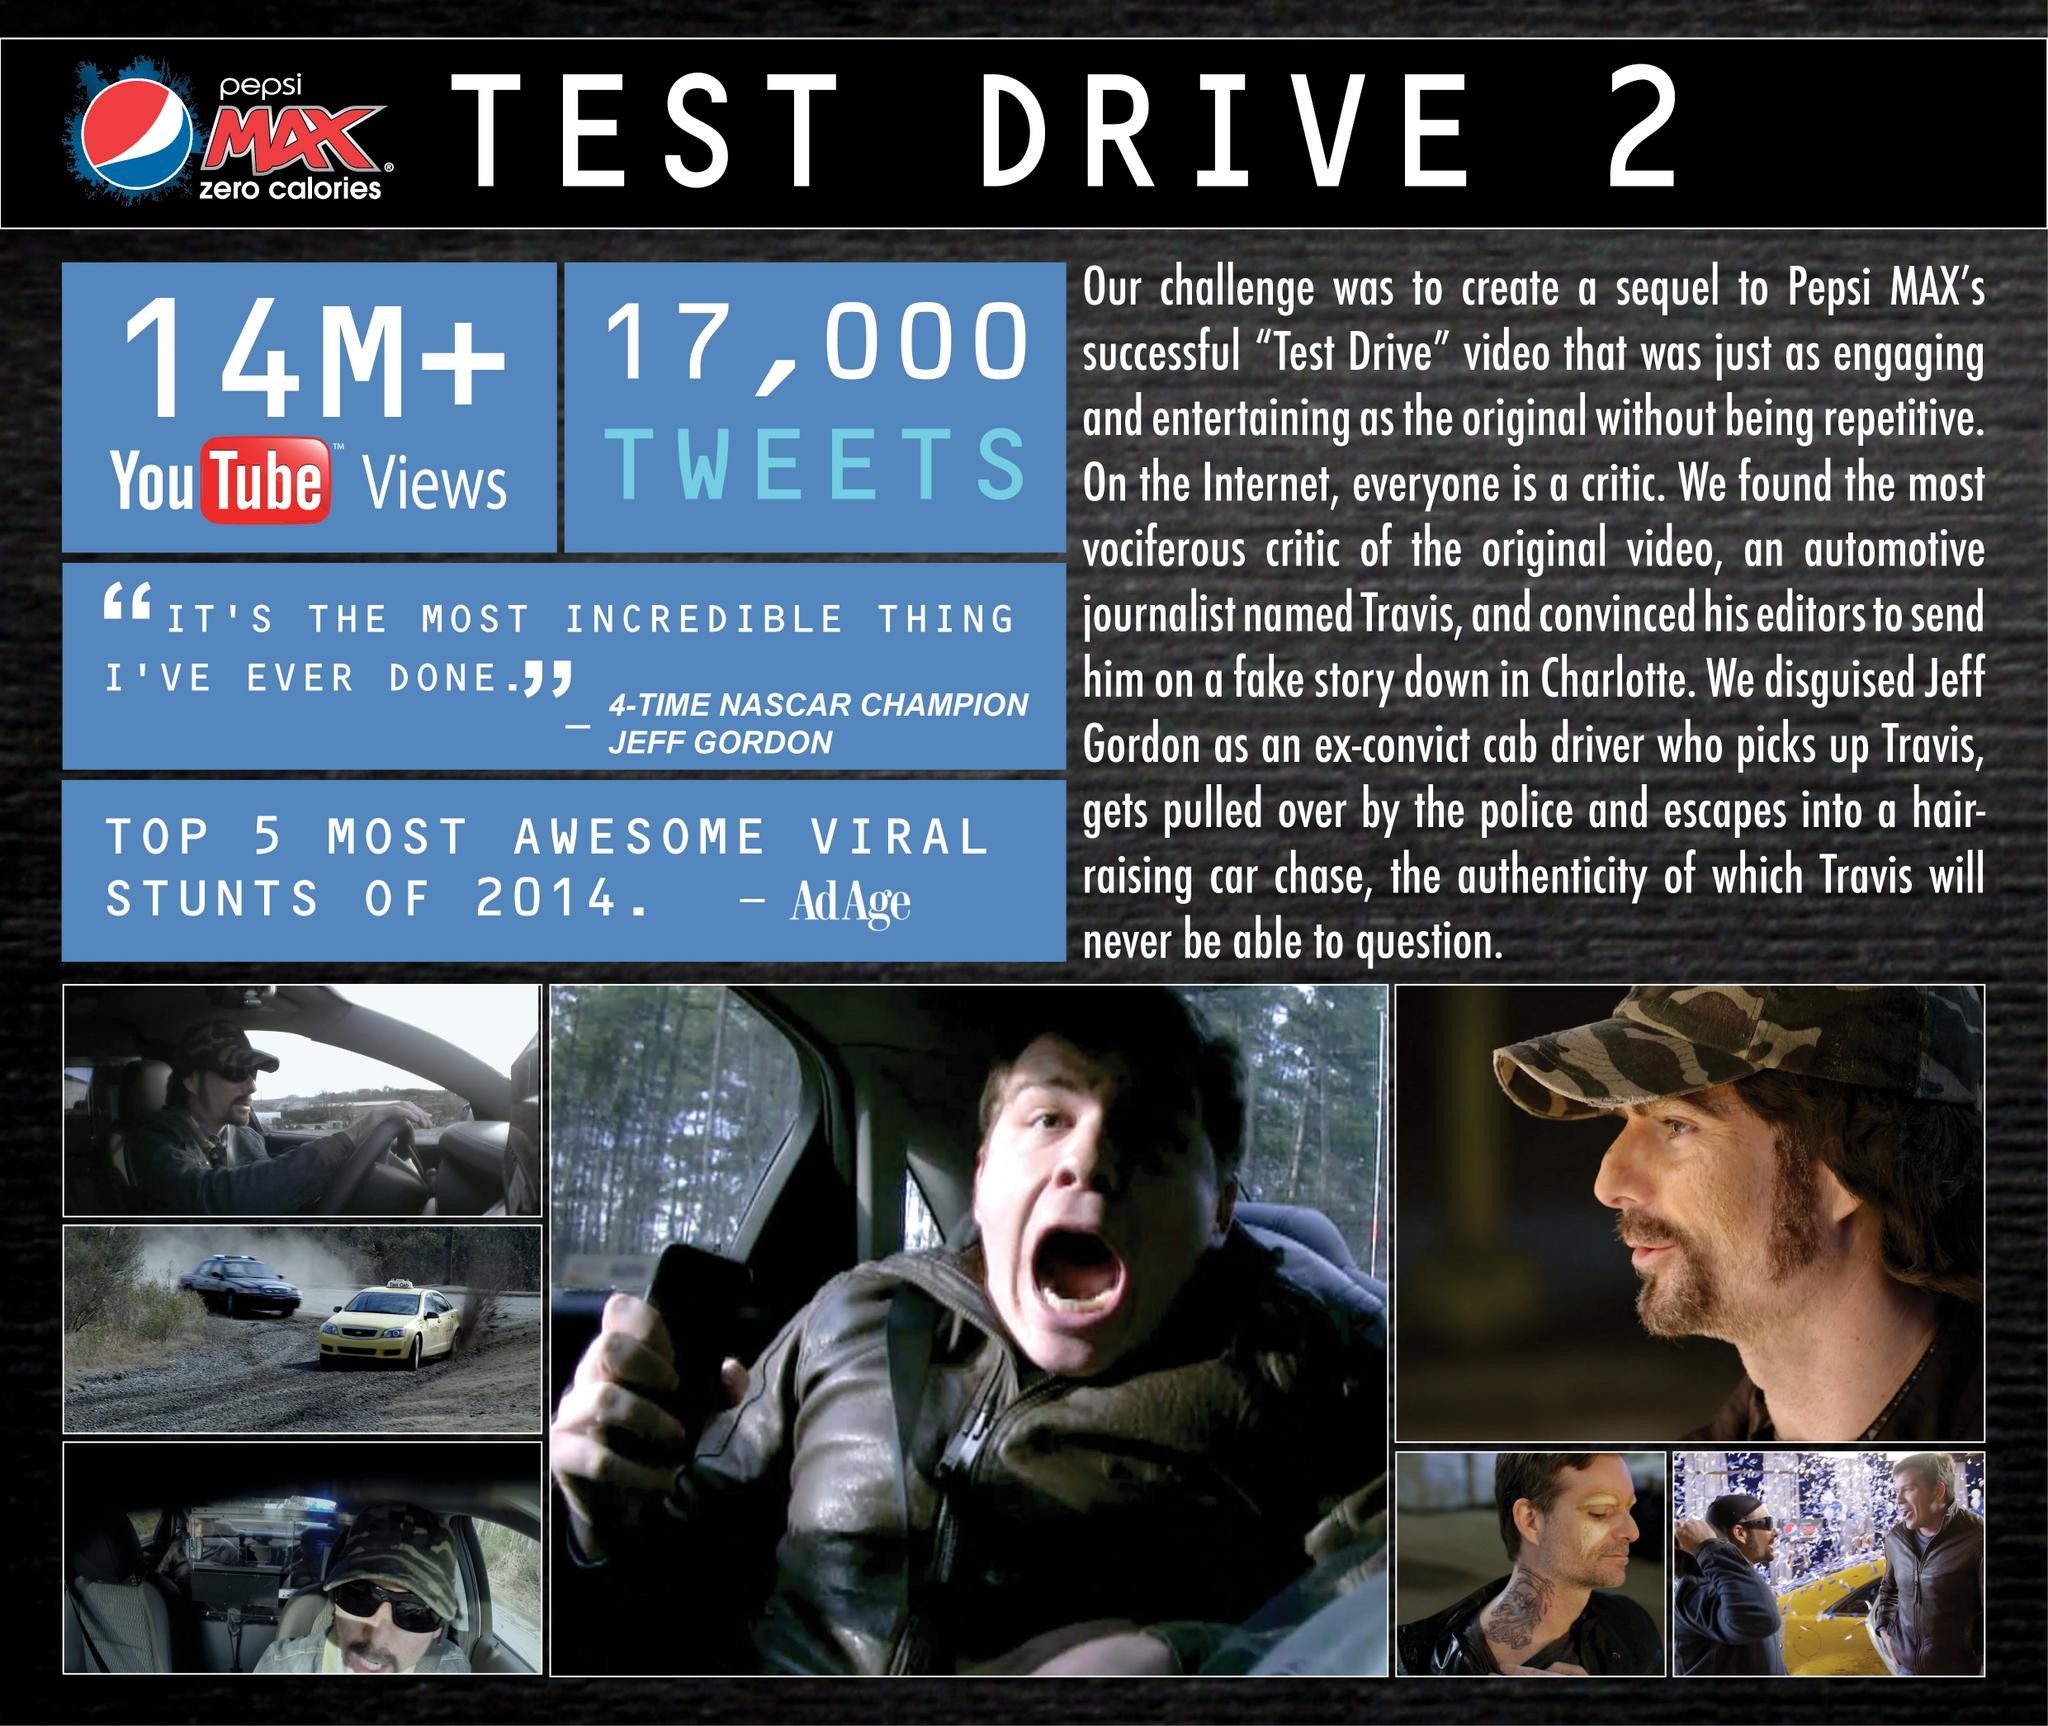 PEPSI MAX & JEFF GORDON PRESENT: 'TEST DRIVE 2'